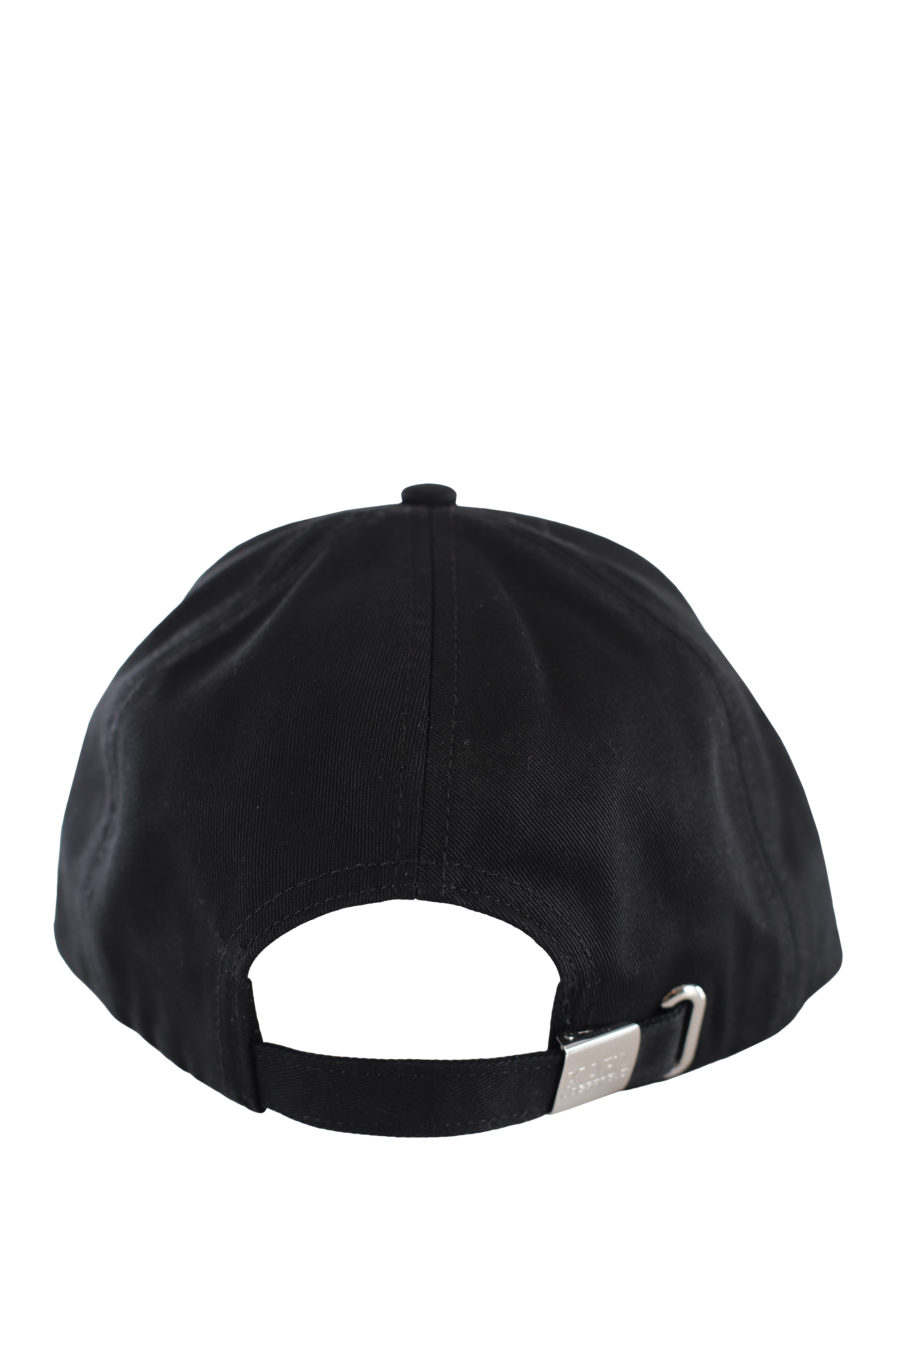 Gorra negra con logo "Karl" - IMG 1775